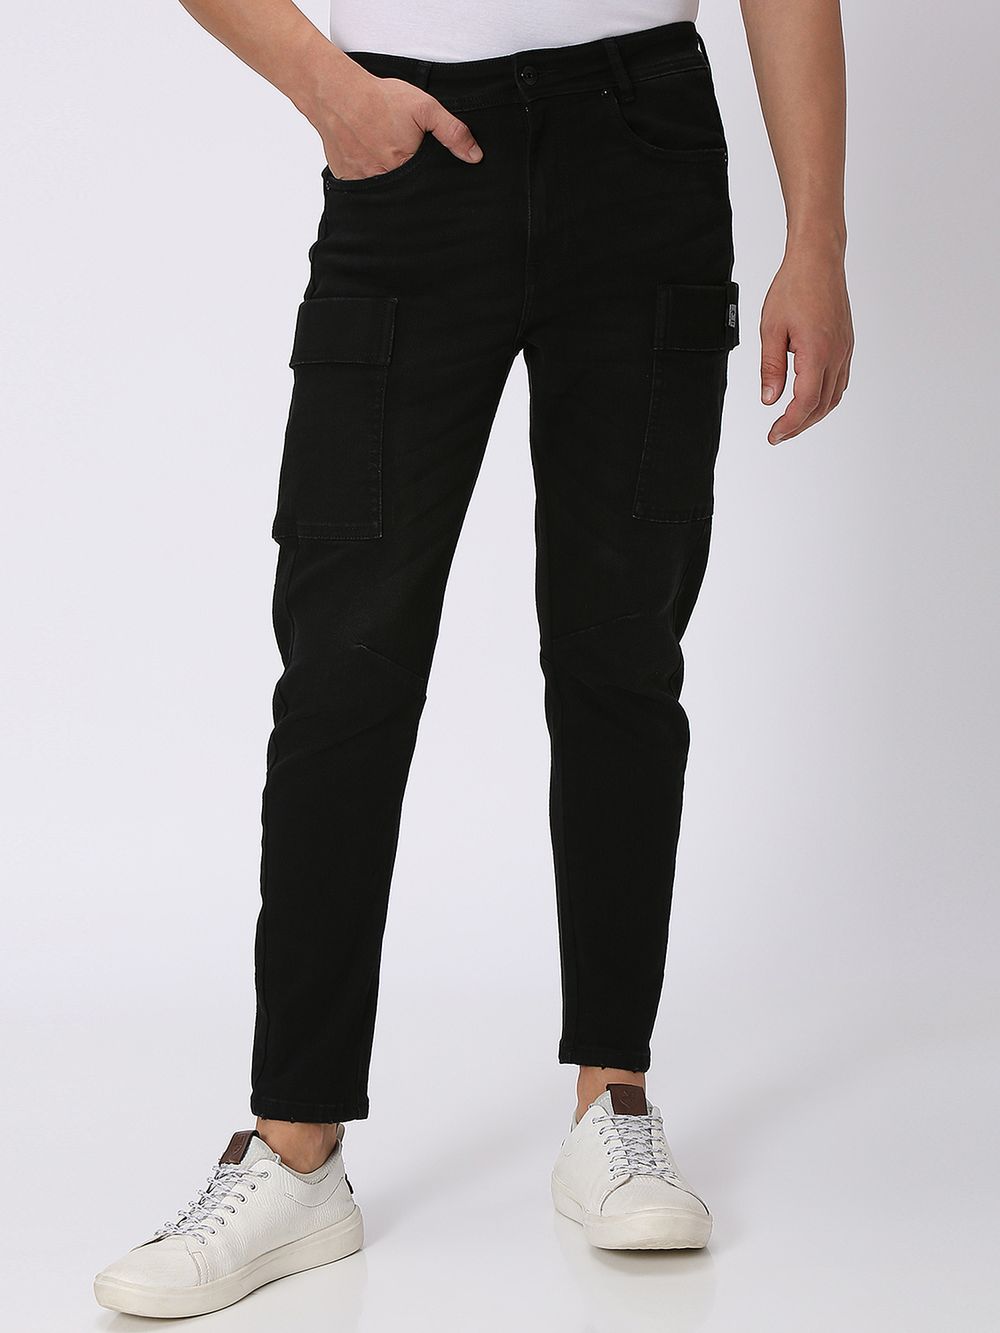 Jet Black Narrow Fit Originals Stretch Jeans